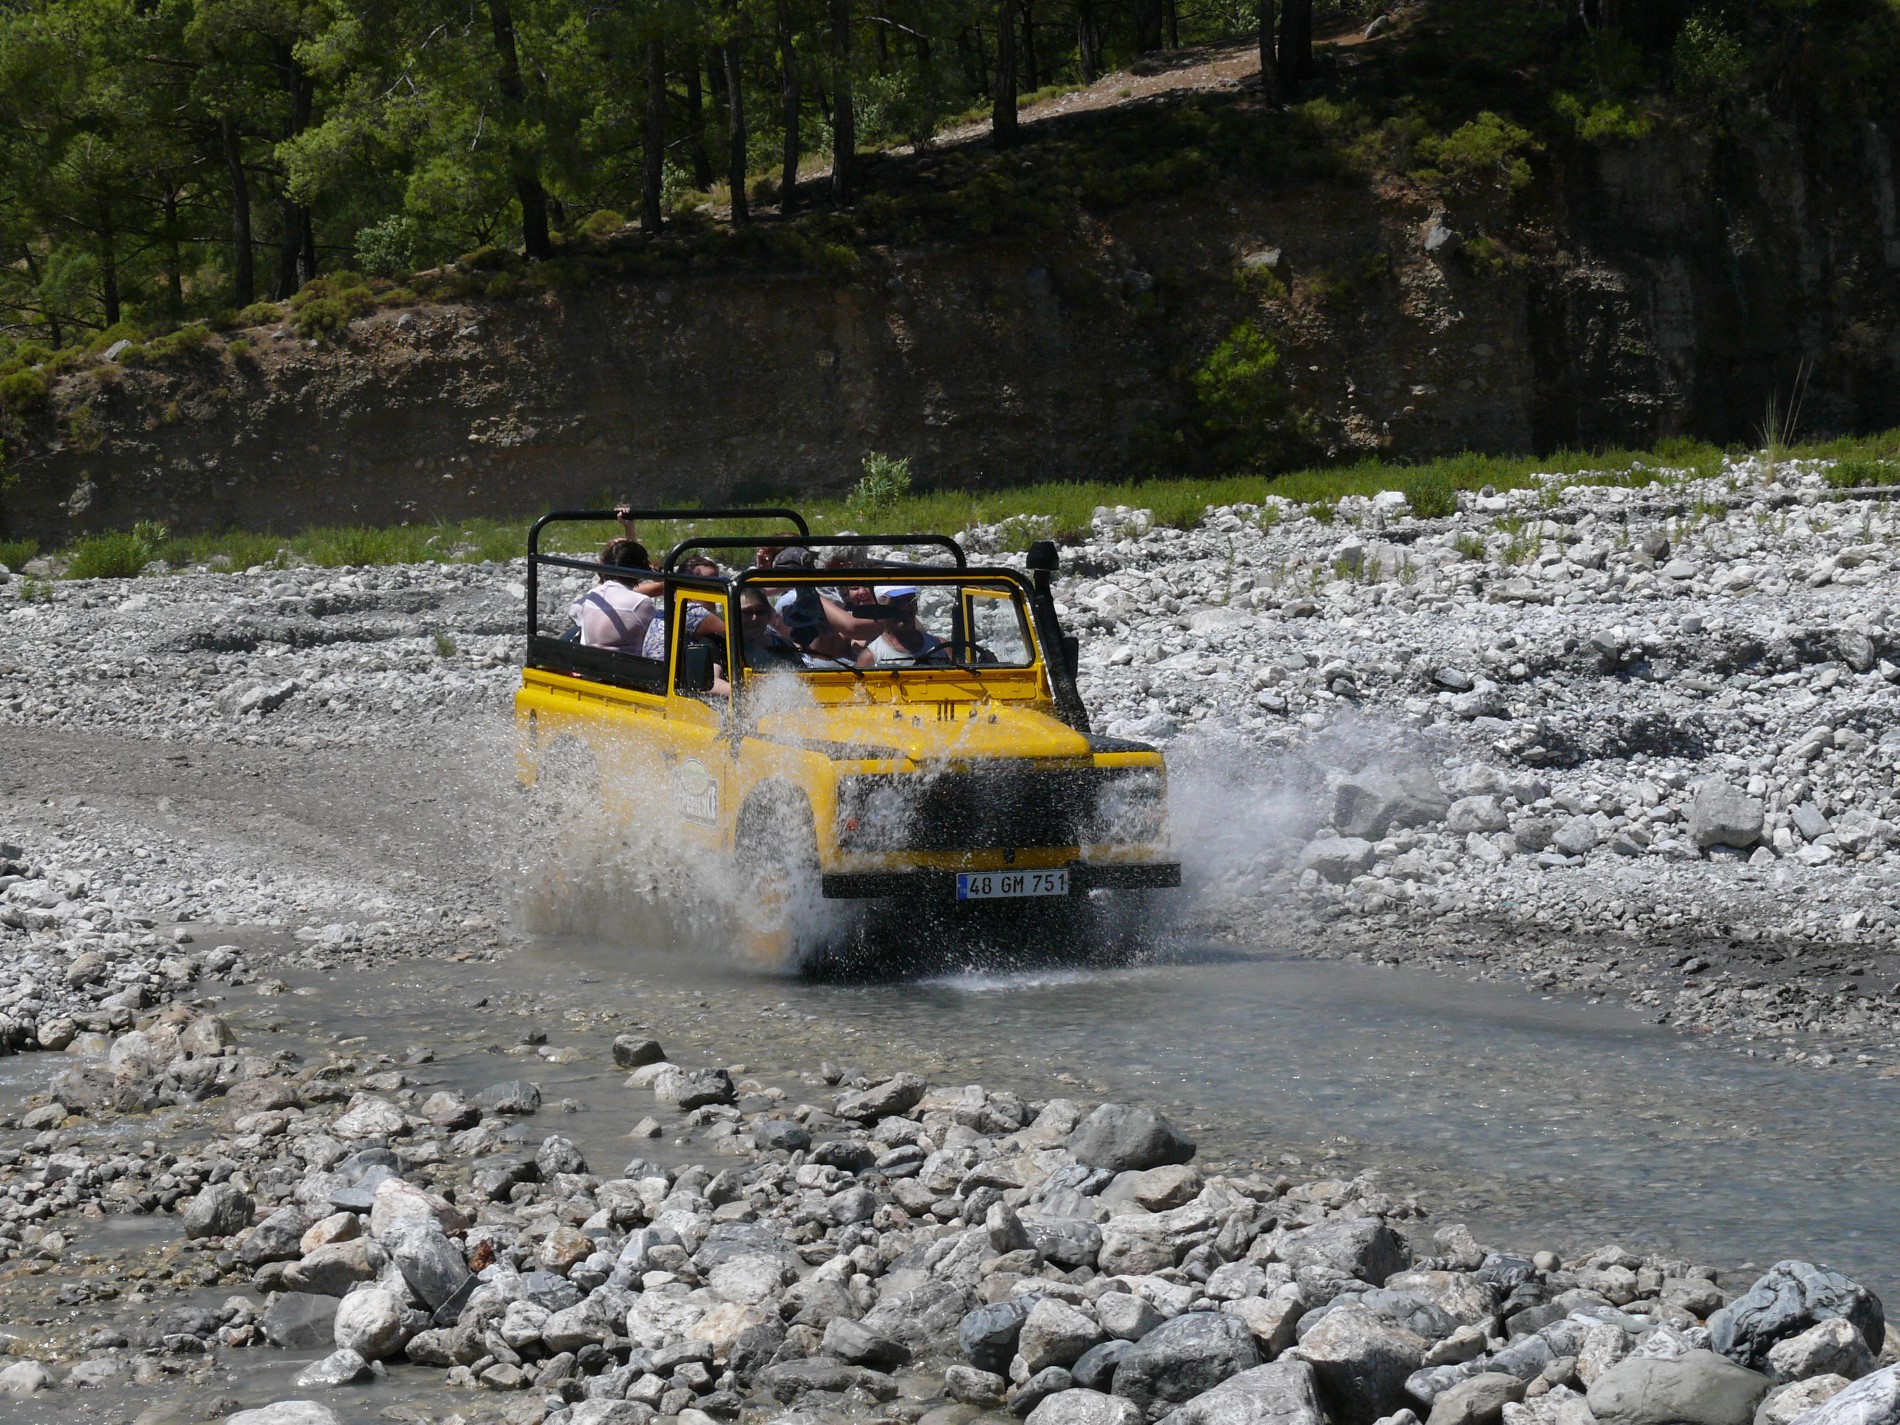 Fethiye Jeep Safari Saklıkent Kanyonu GİZLİ CENNET Turu